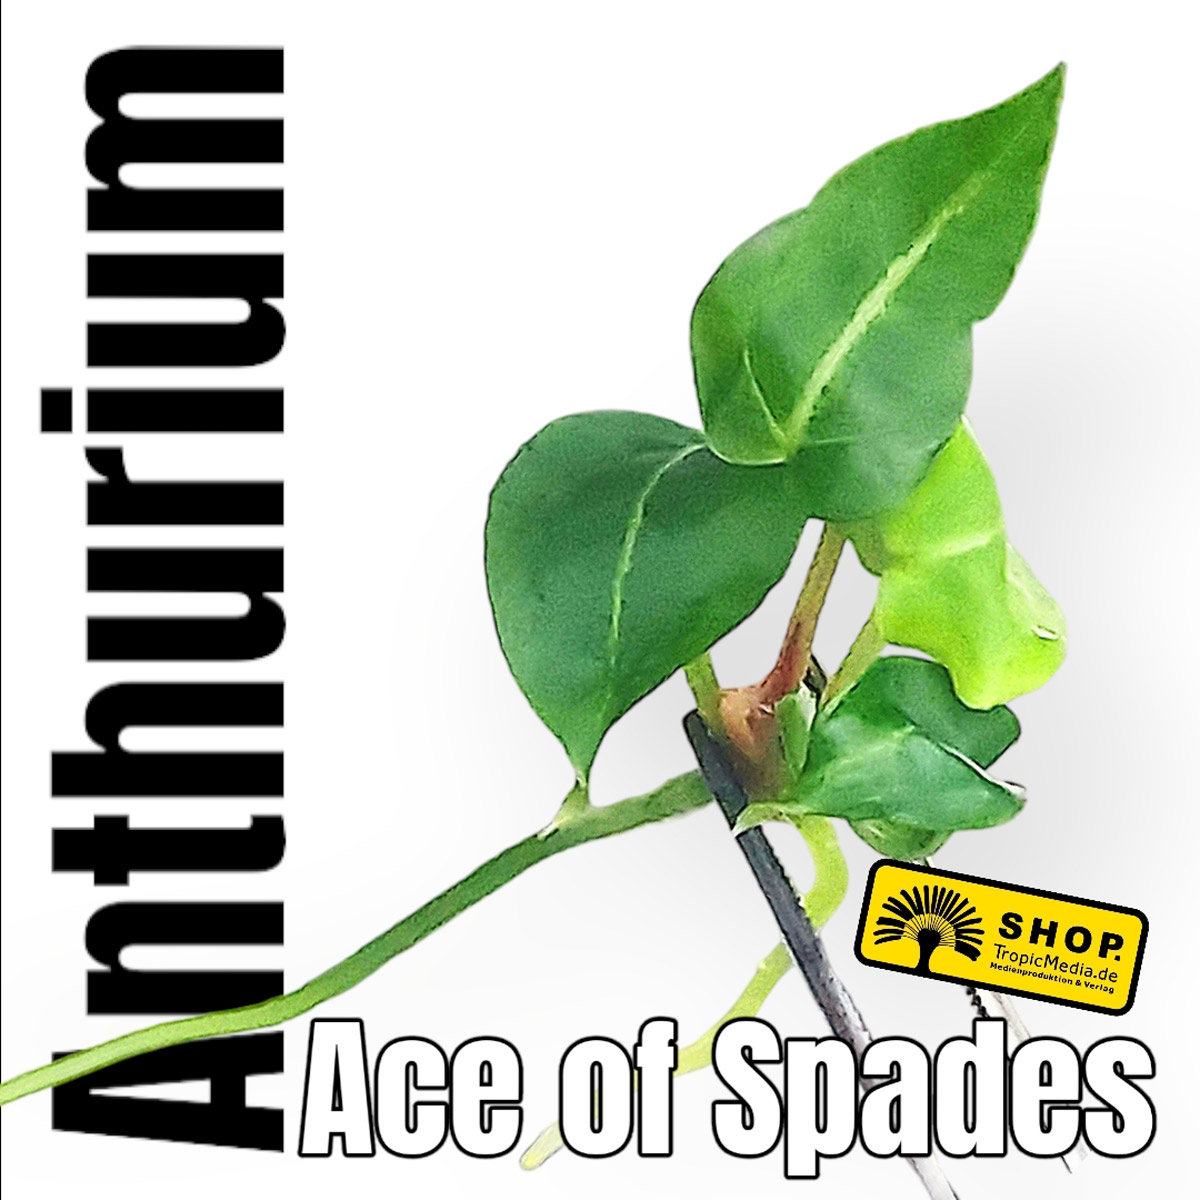 Anthurium Ace of Spades Tissue Culture (TC)